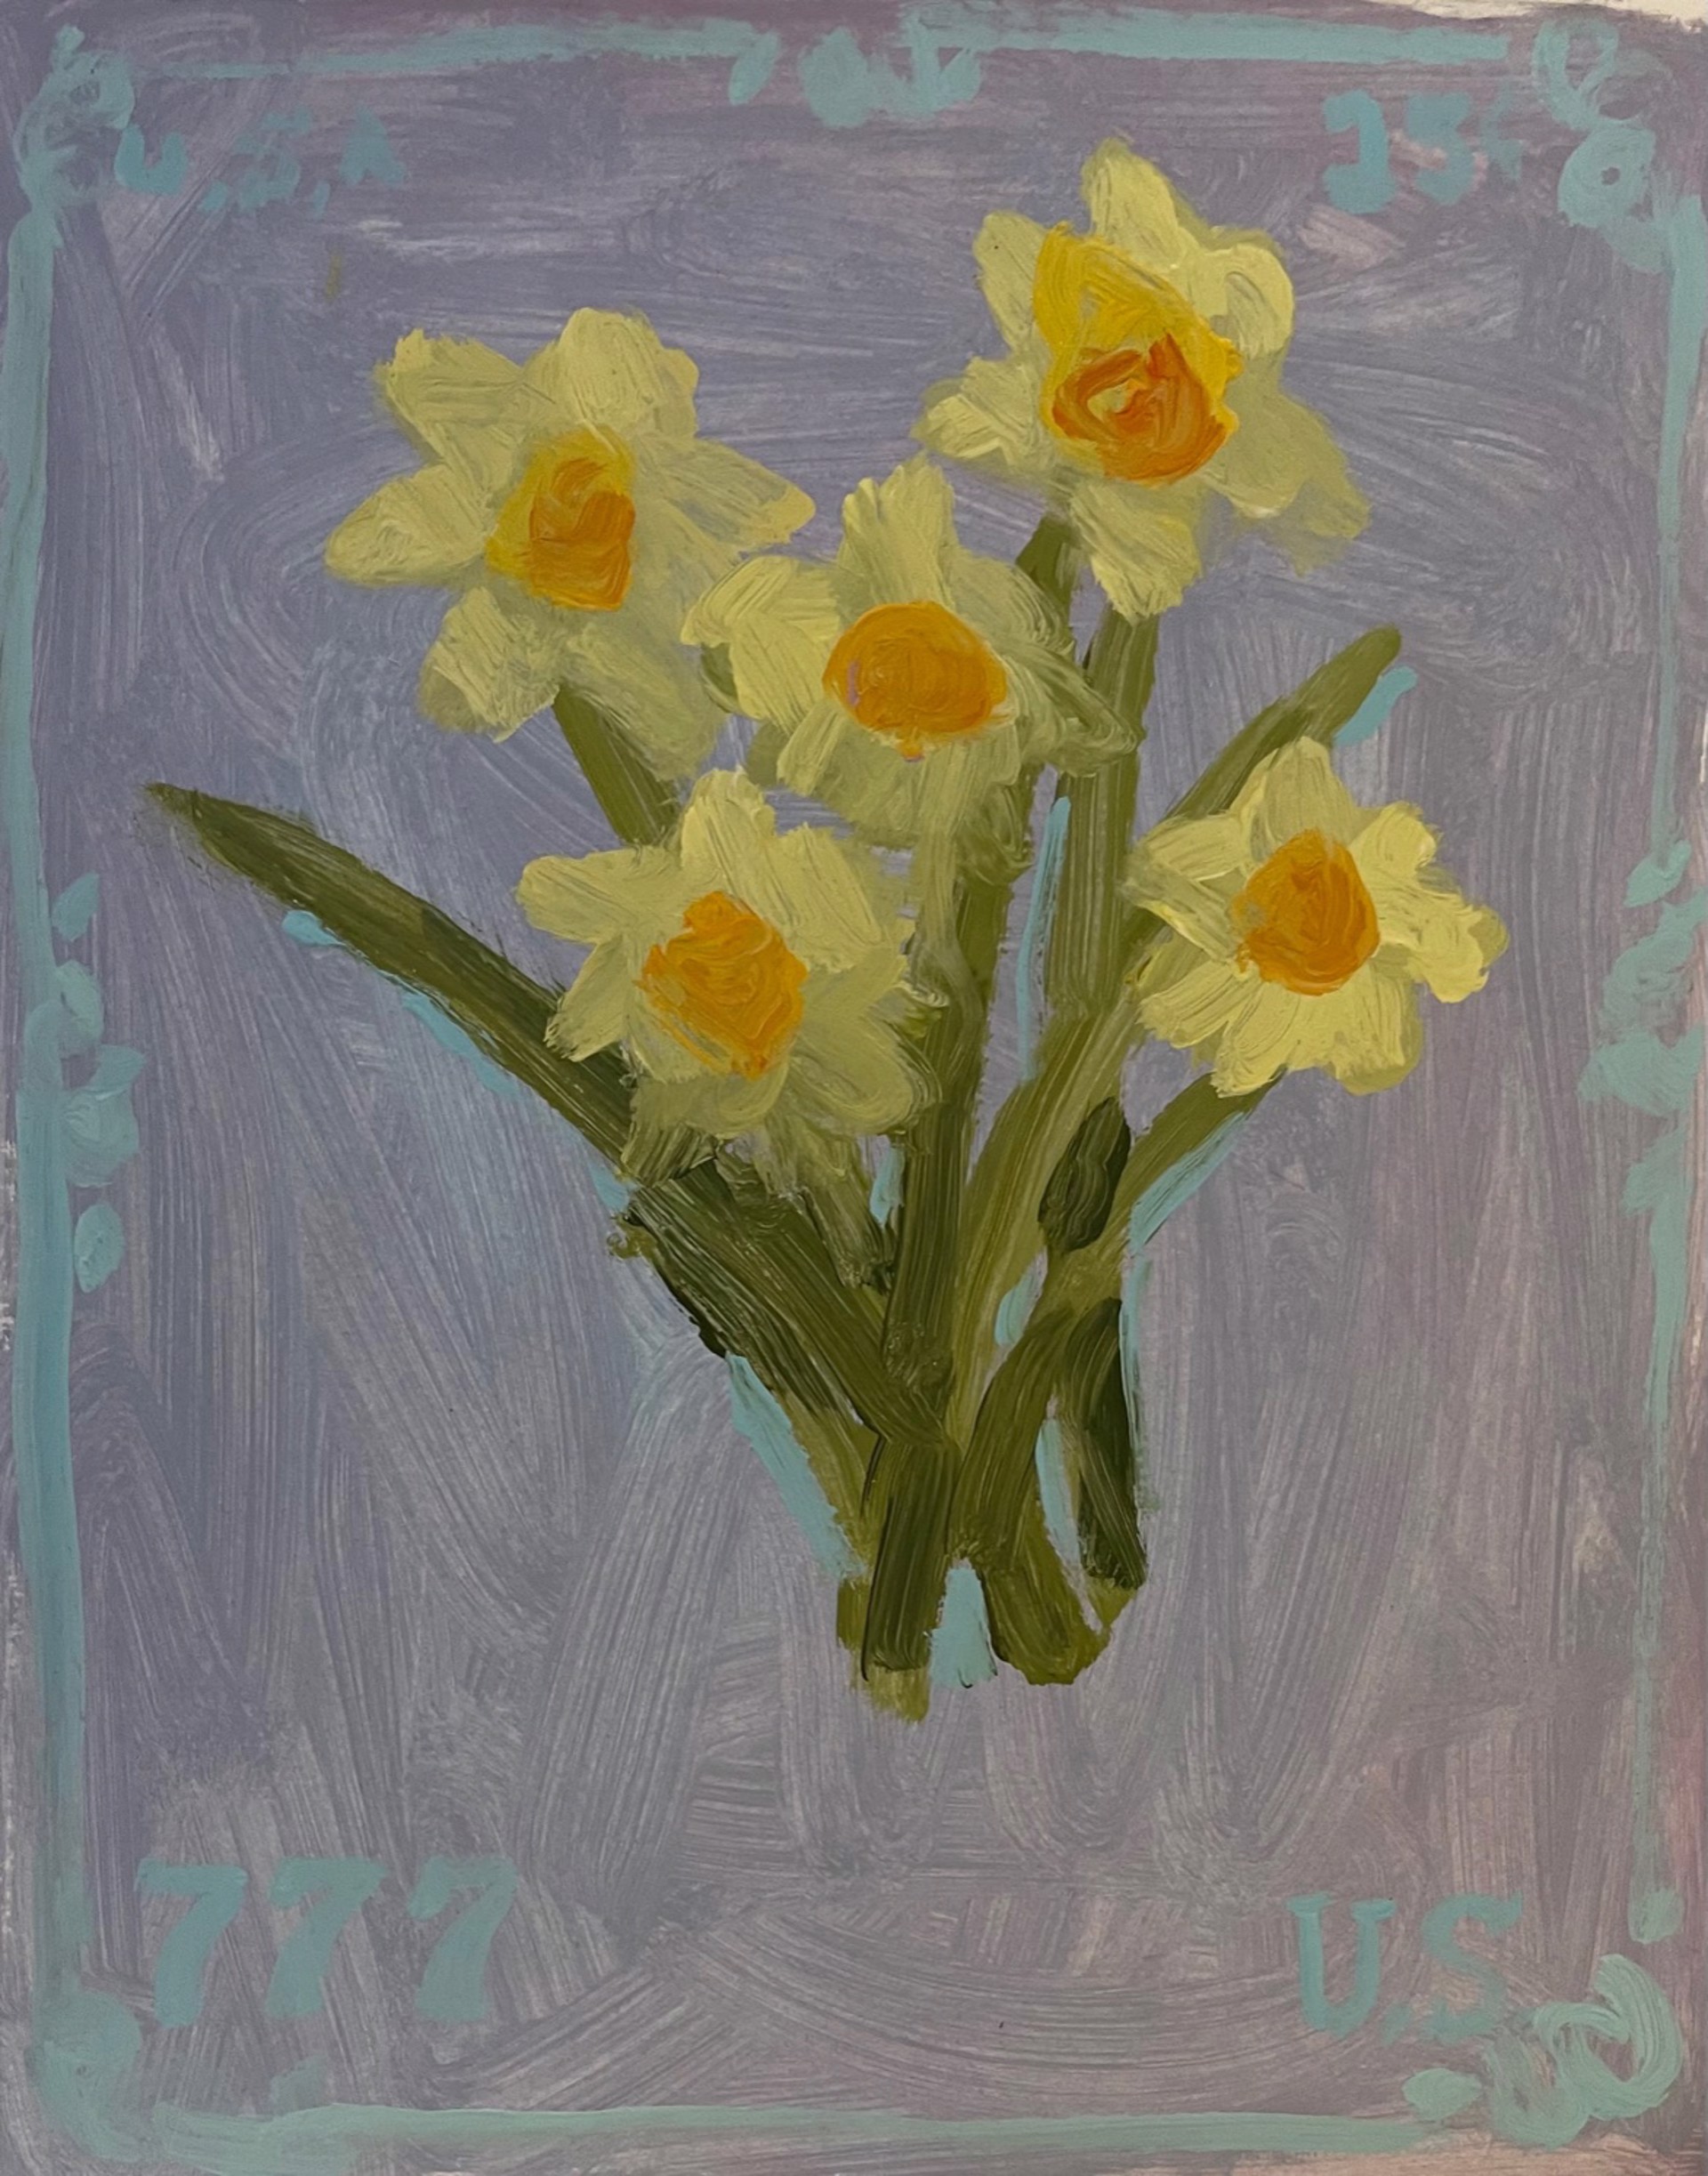 Daffodils by Evan Jones